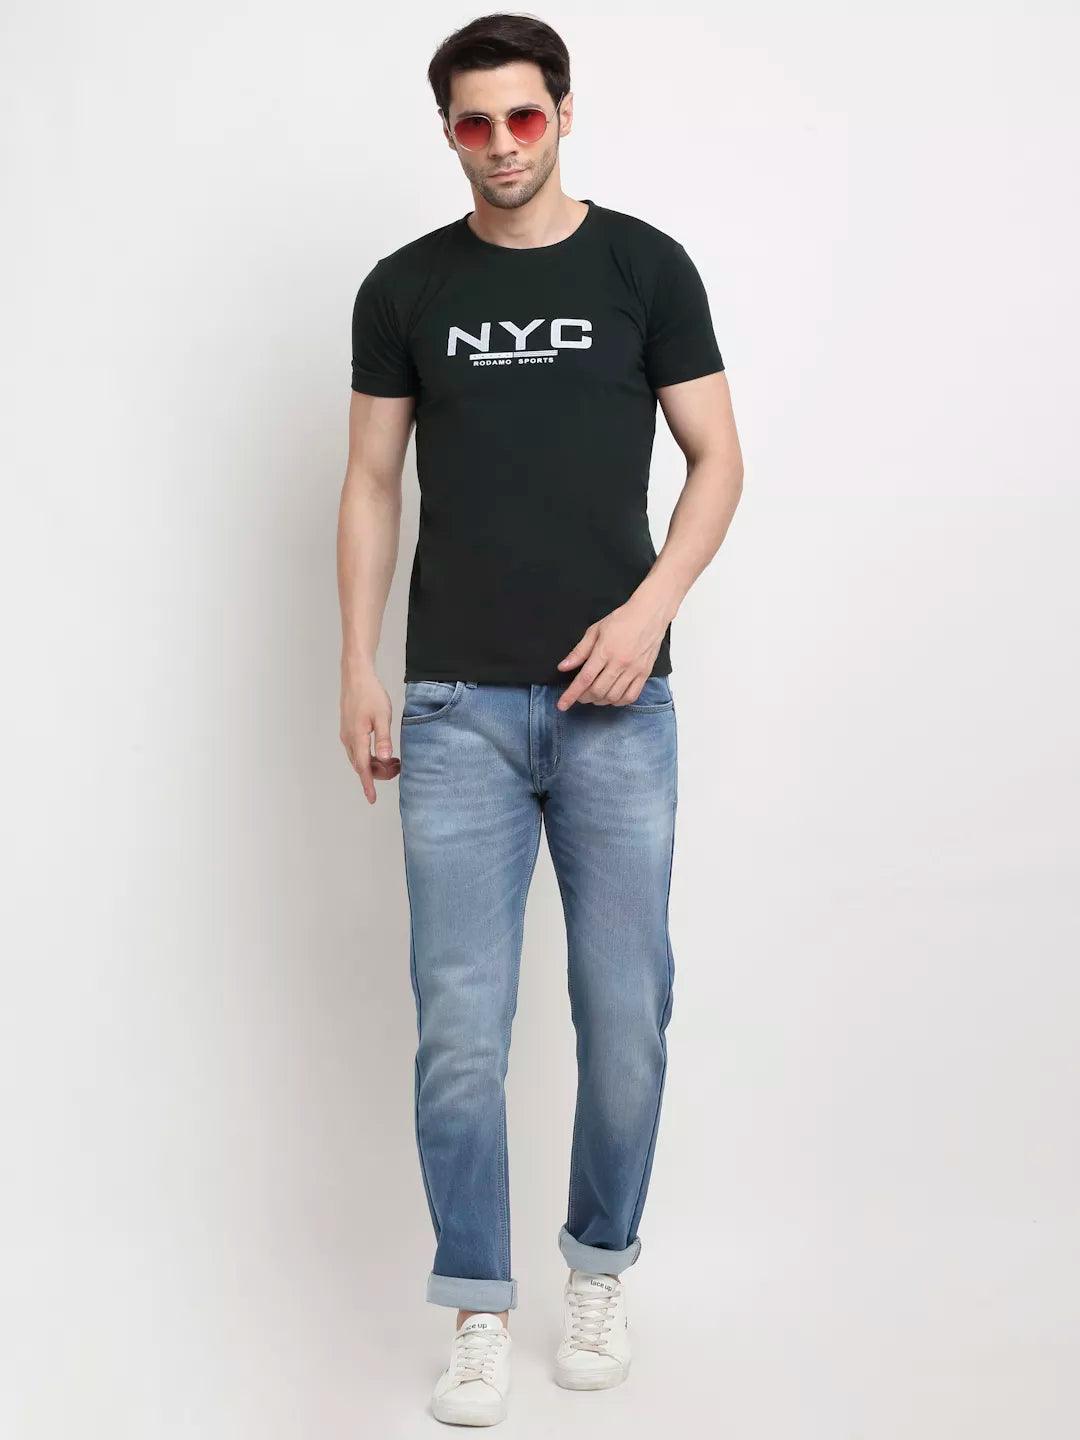 Rodamo Cotton Printed Black T-Shirt (Medium) - ShopIMO